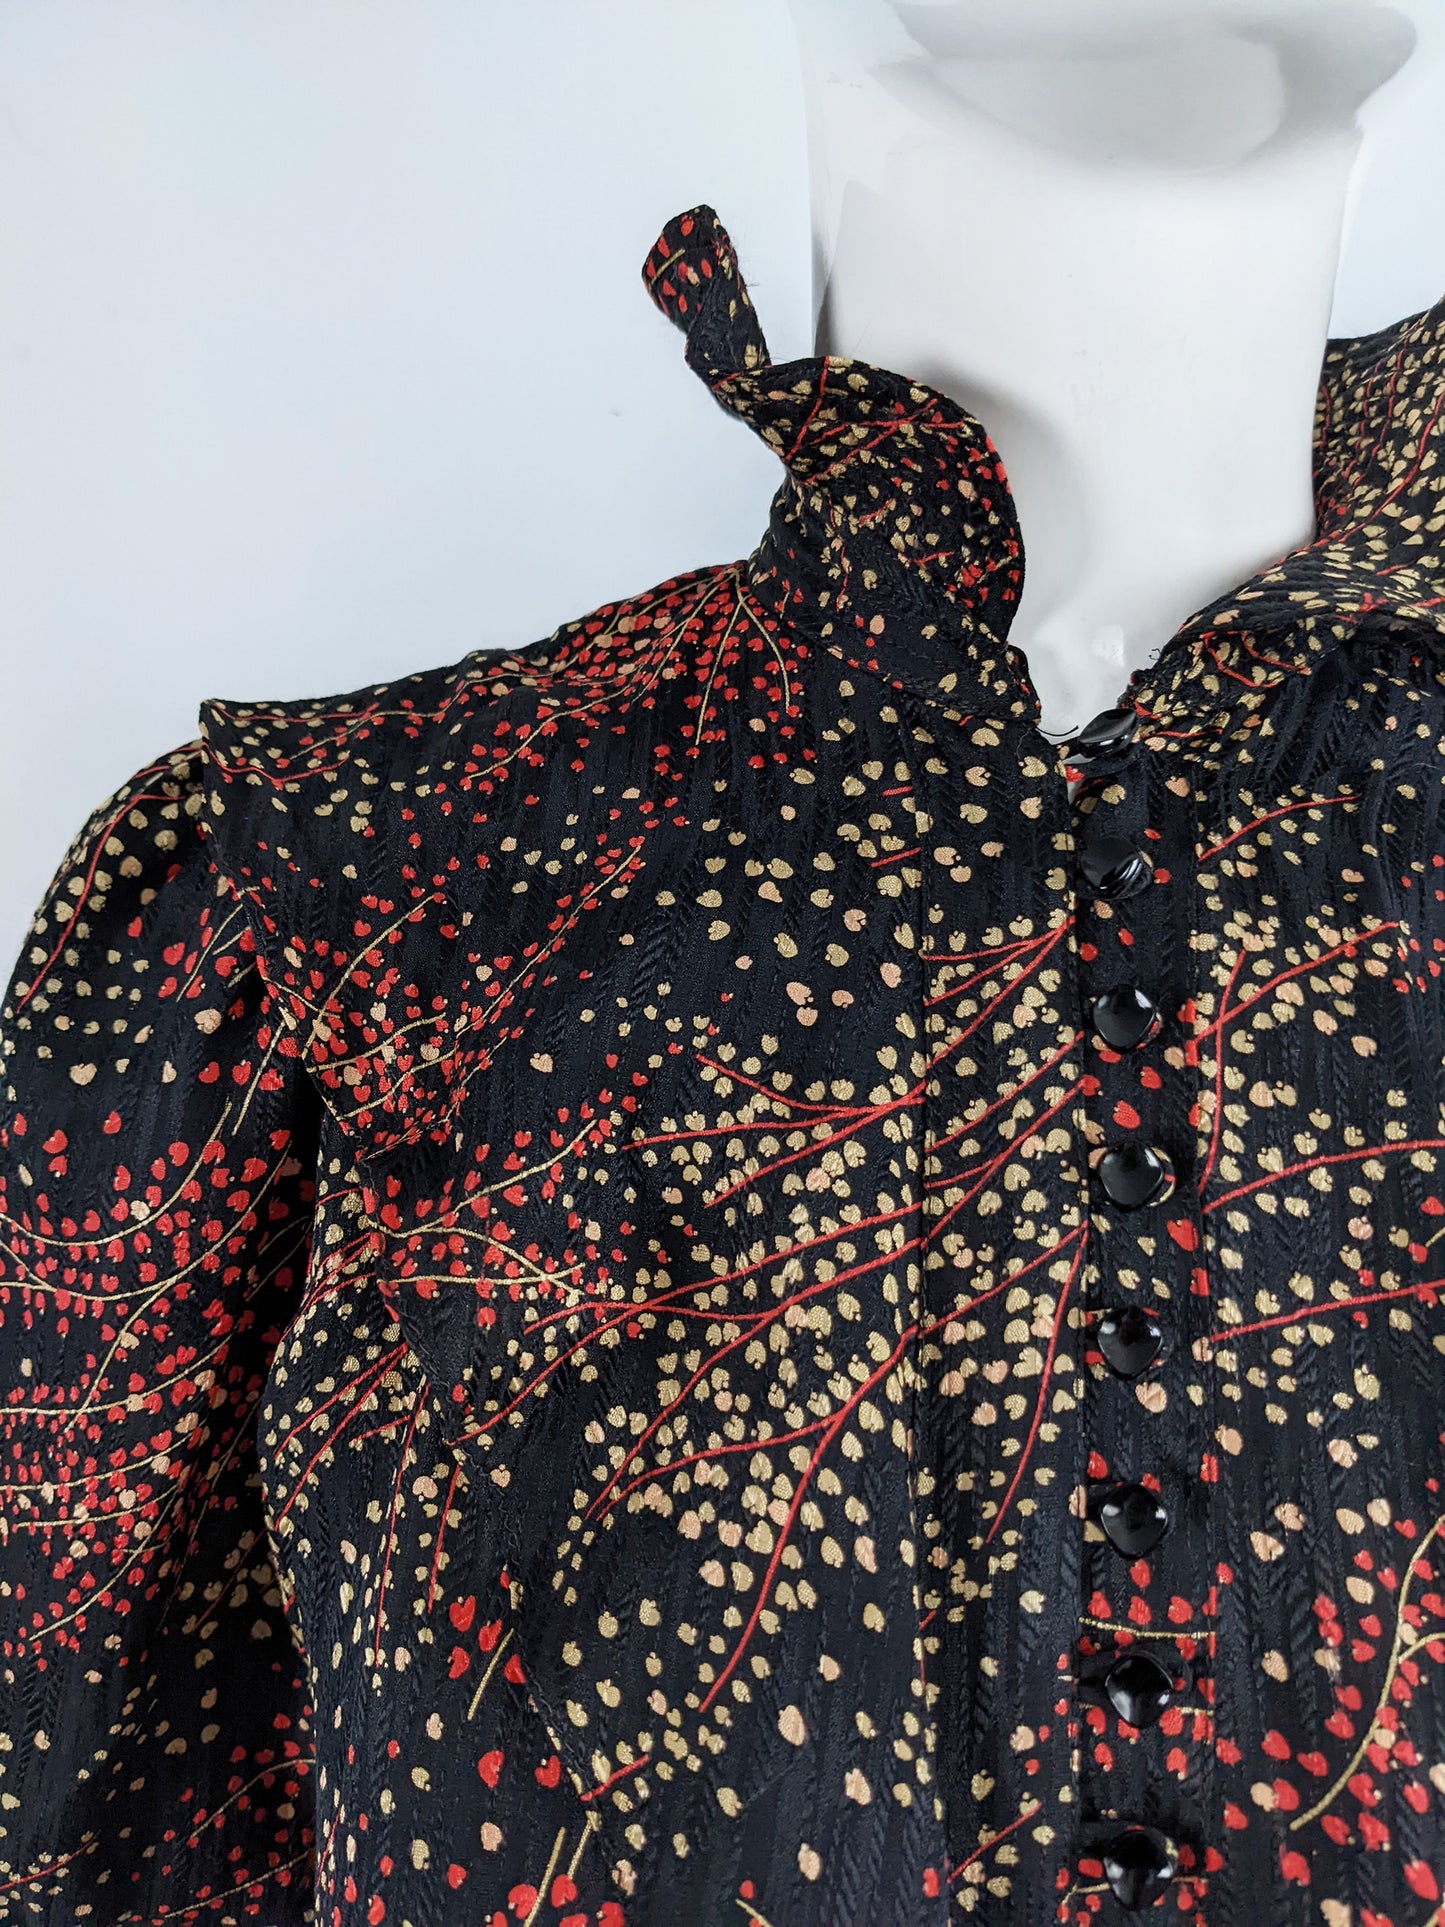 Jean & Martin Pallant Red & Black Silk Blouson Dress, 1980s